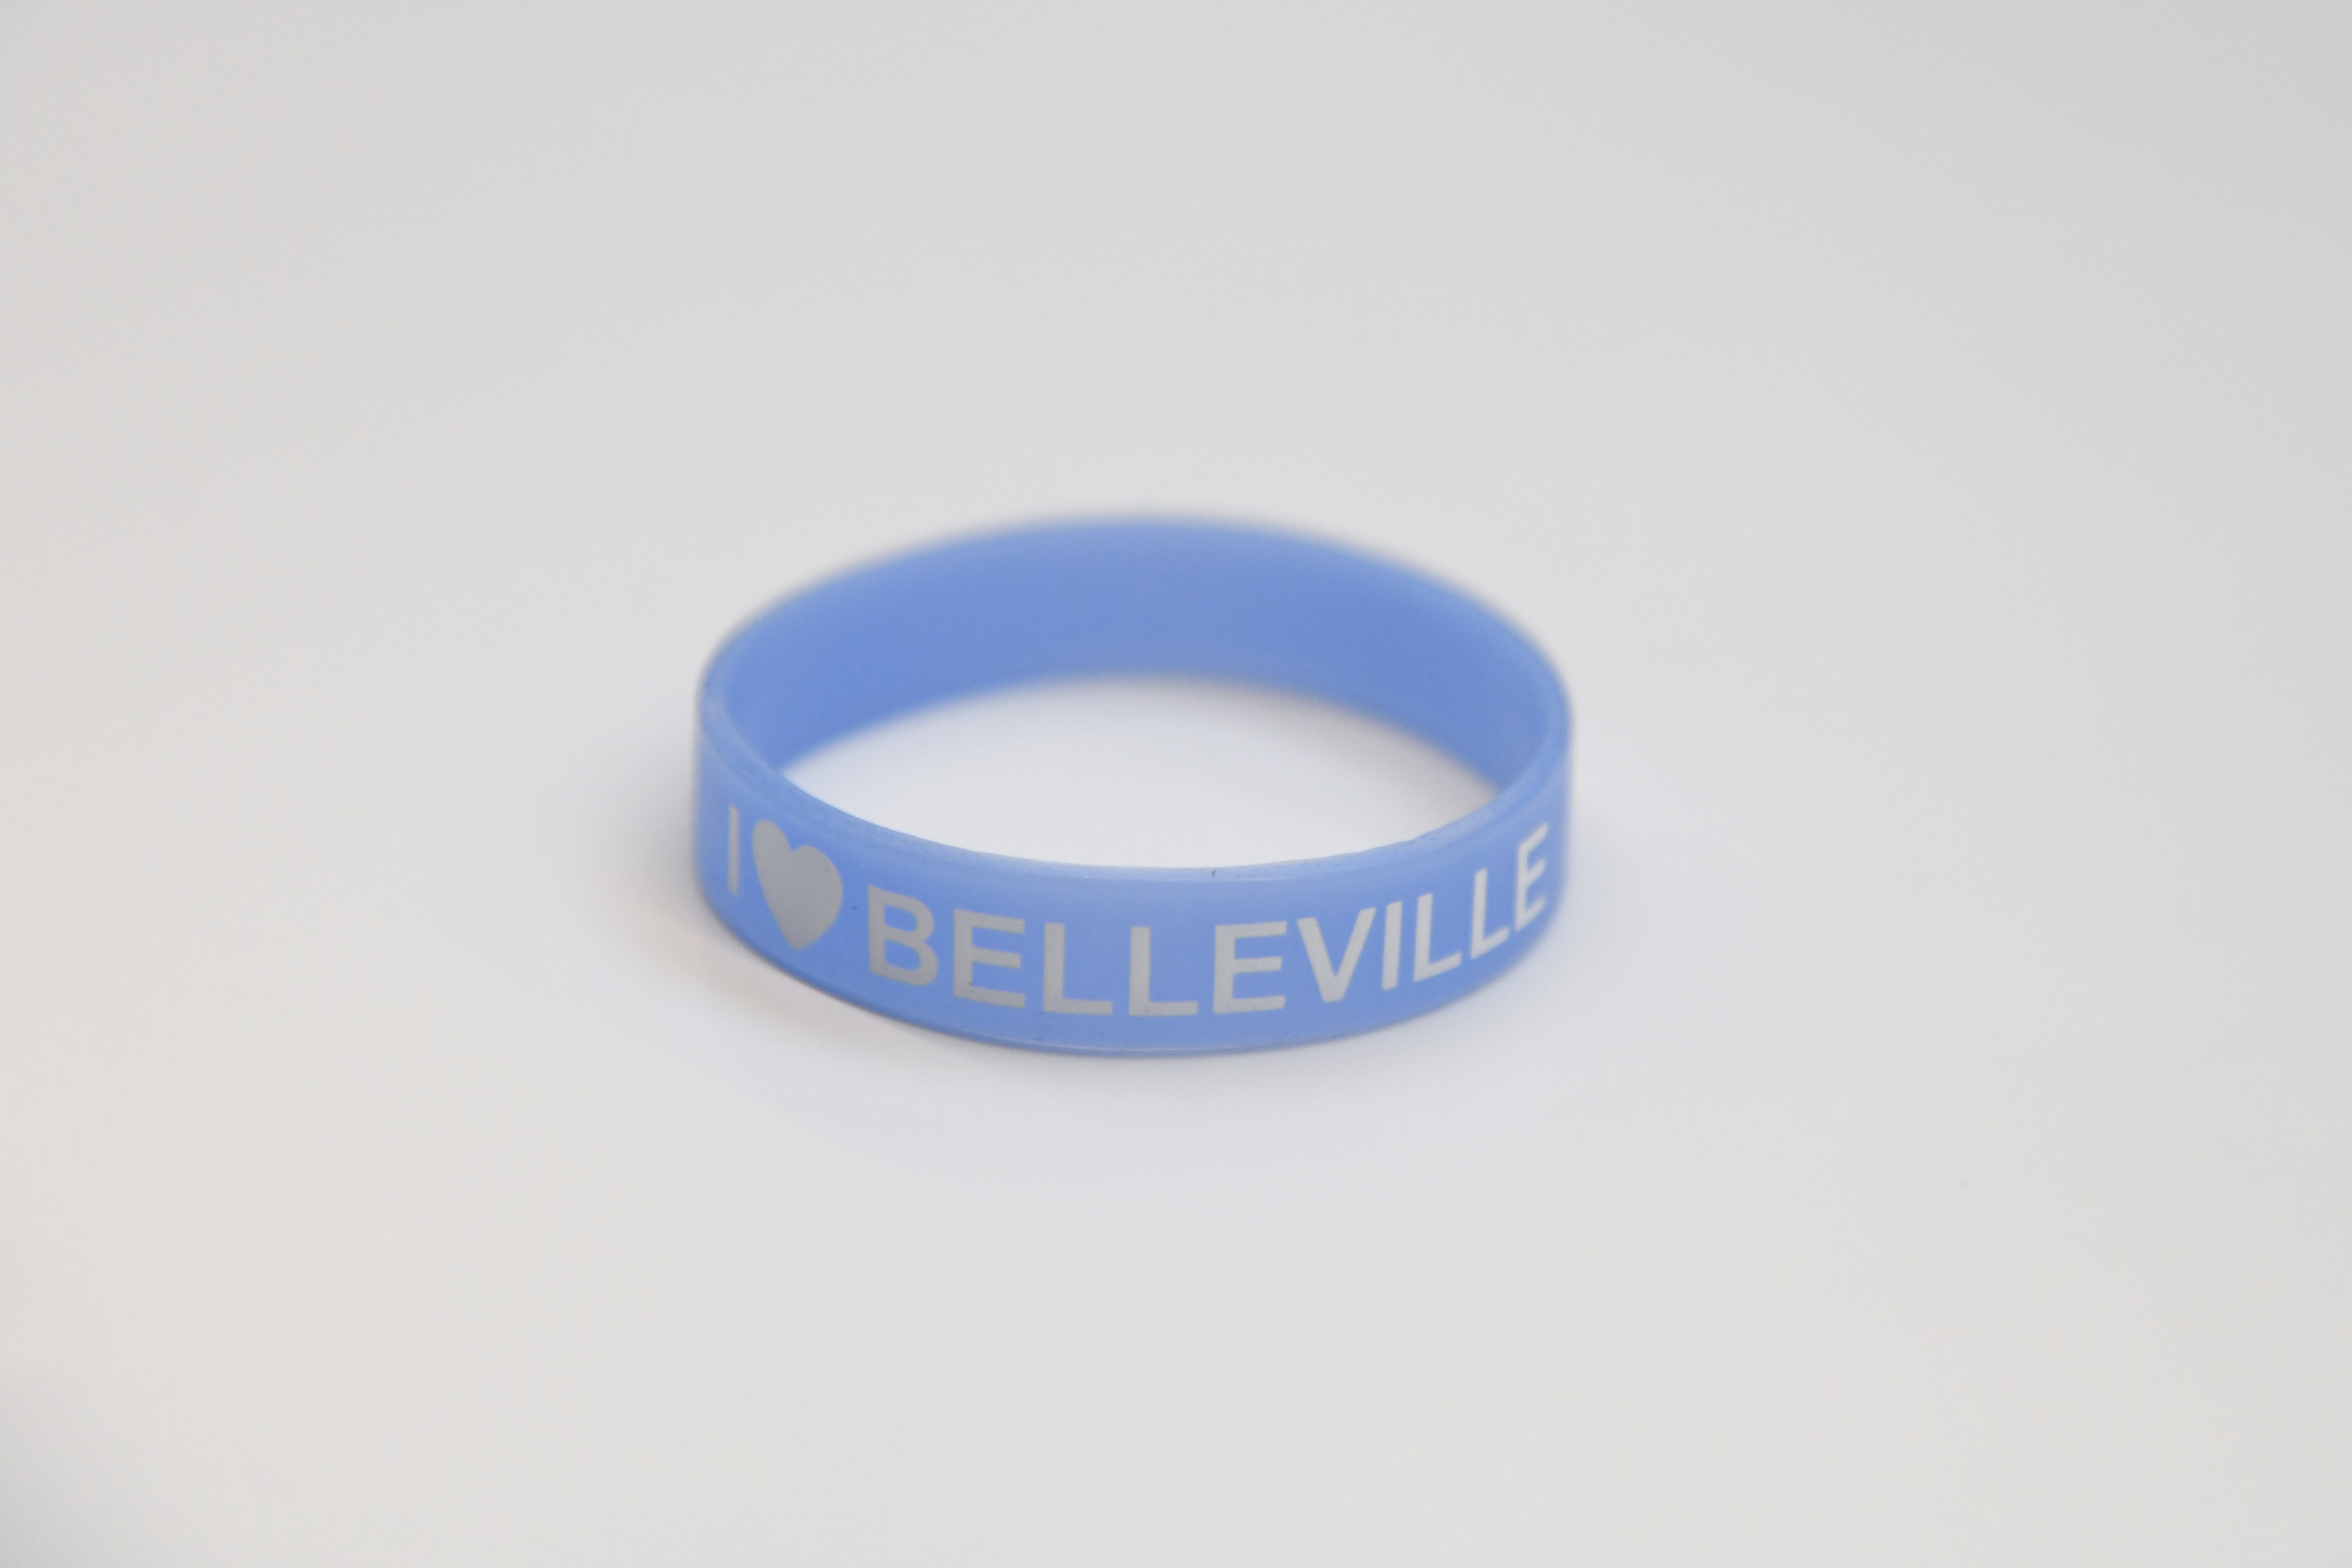 City of Belleville wristband.